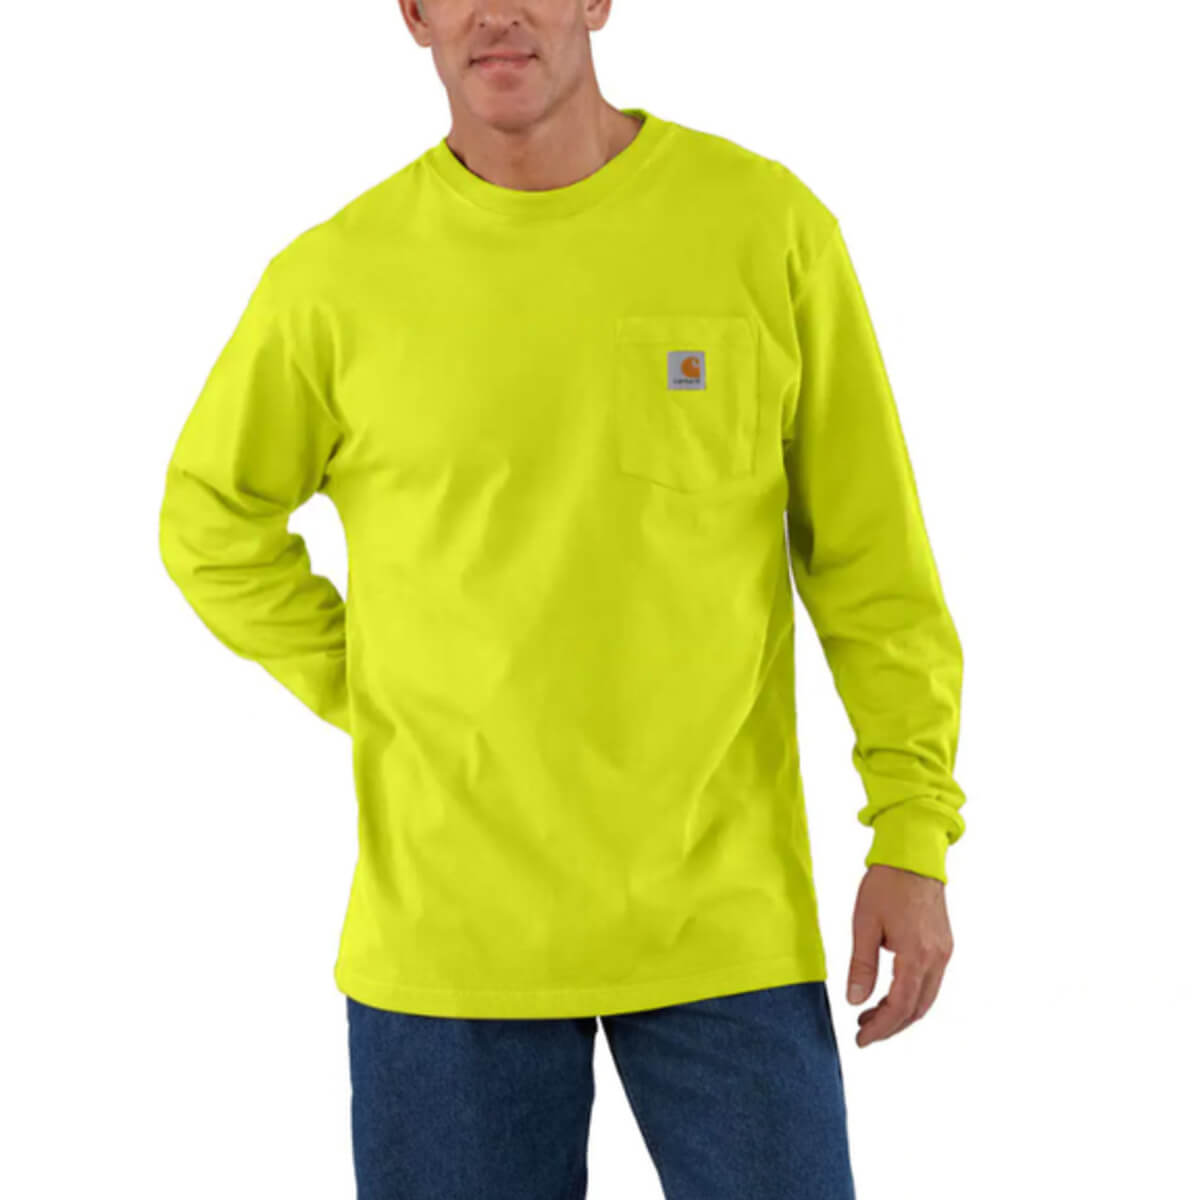 Carhartt Loose Fit Heavyweight Long Sleeve Shirt - Brite Lime